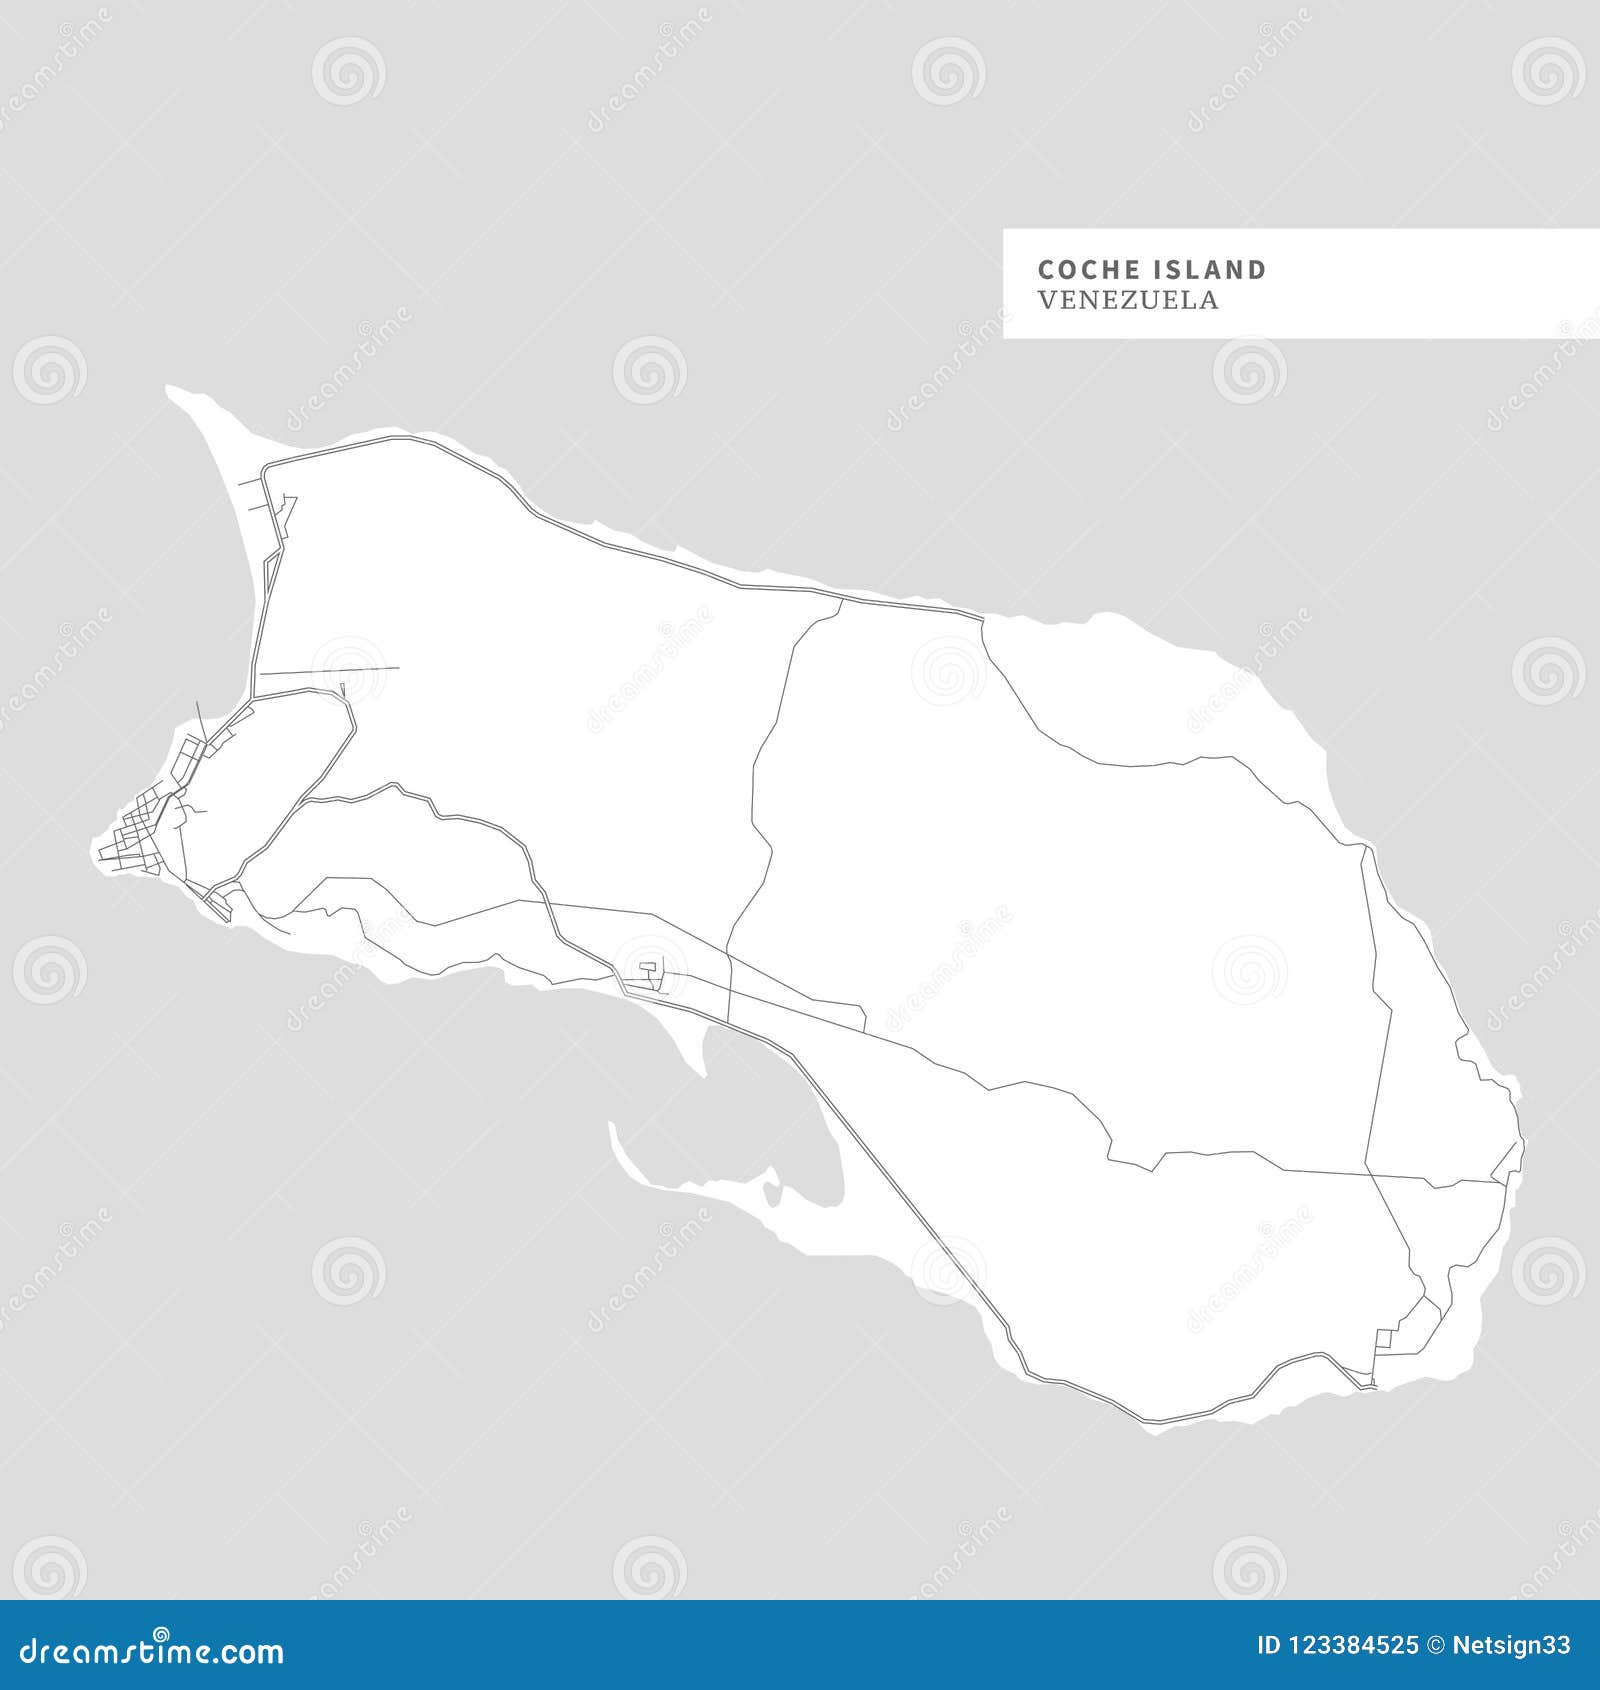 map of coche island